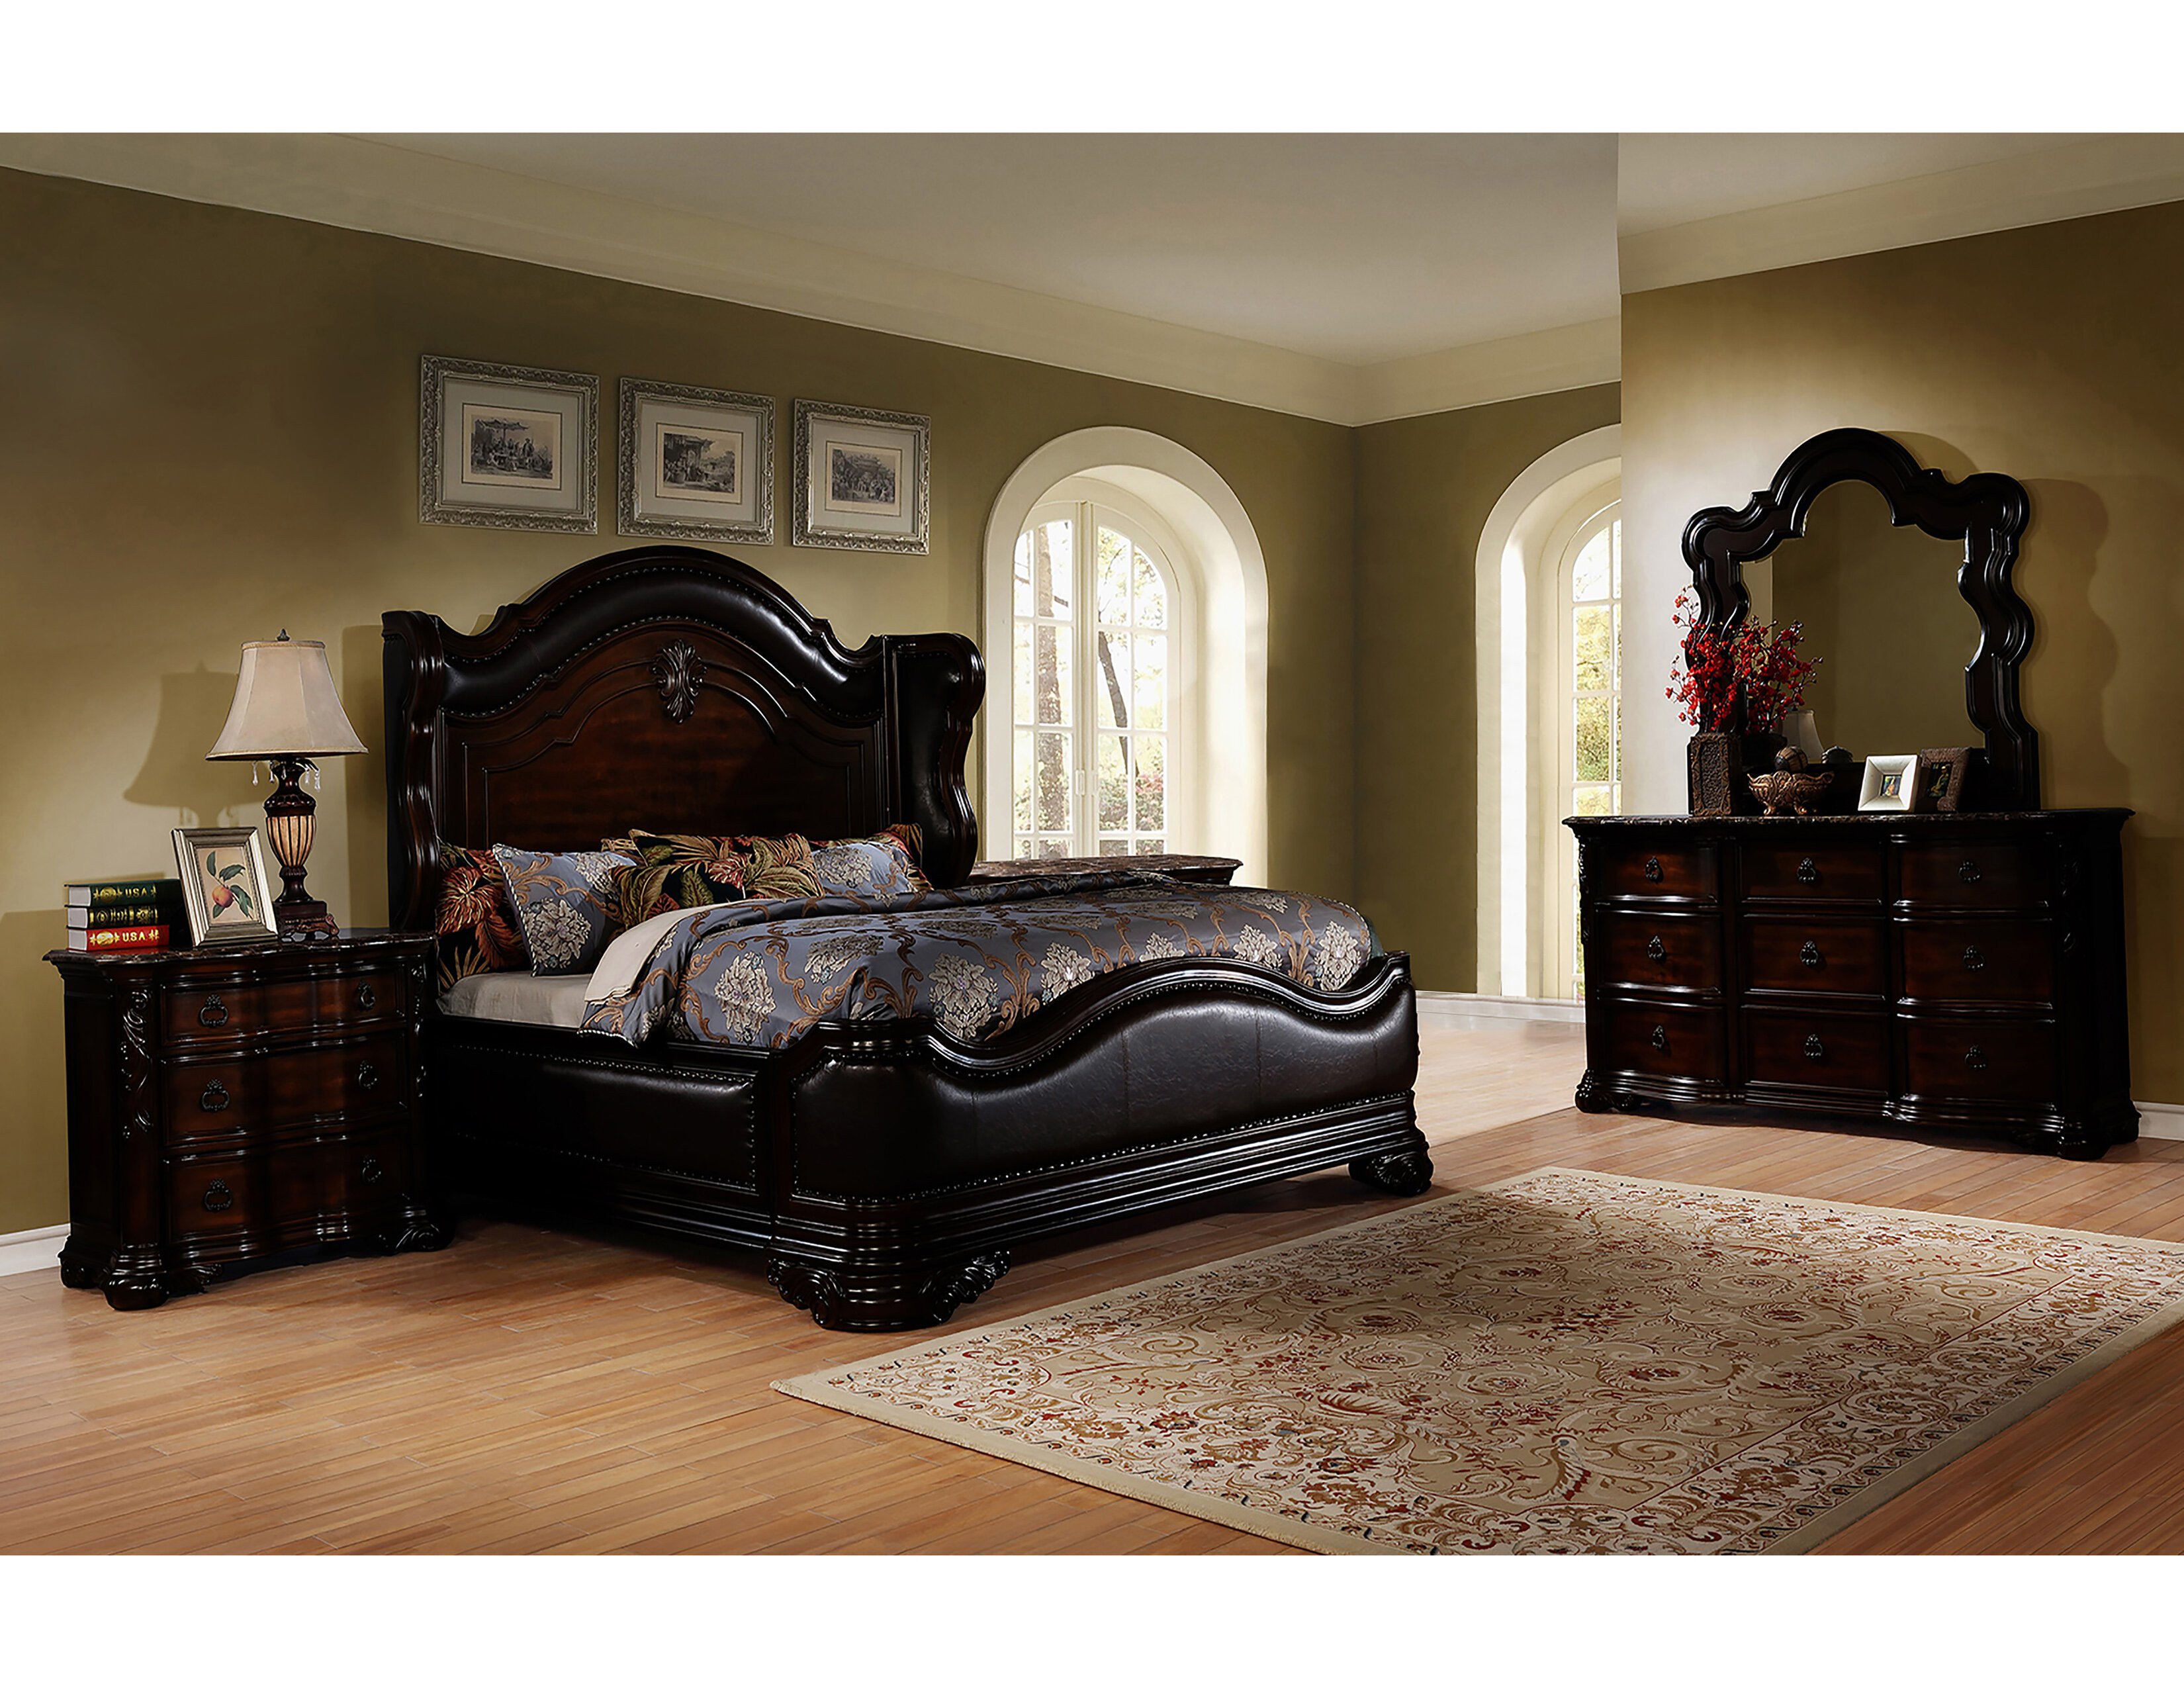 King Bedroom Set with Mattress New Ayan Standard 5 Piece Bedroom Set